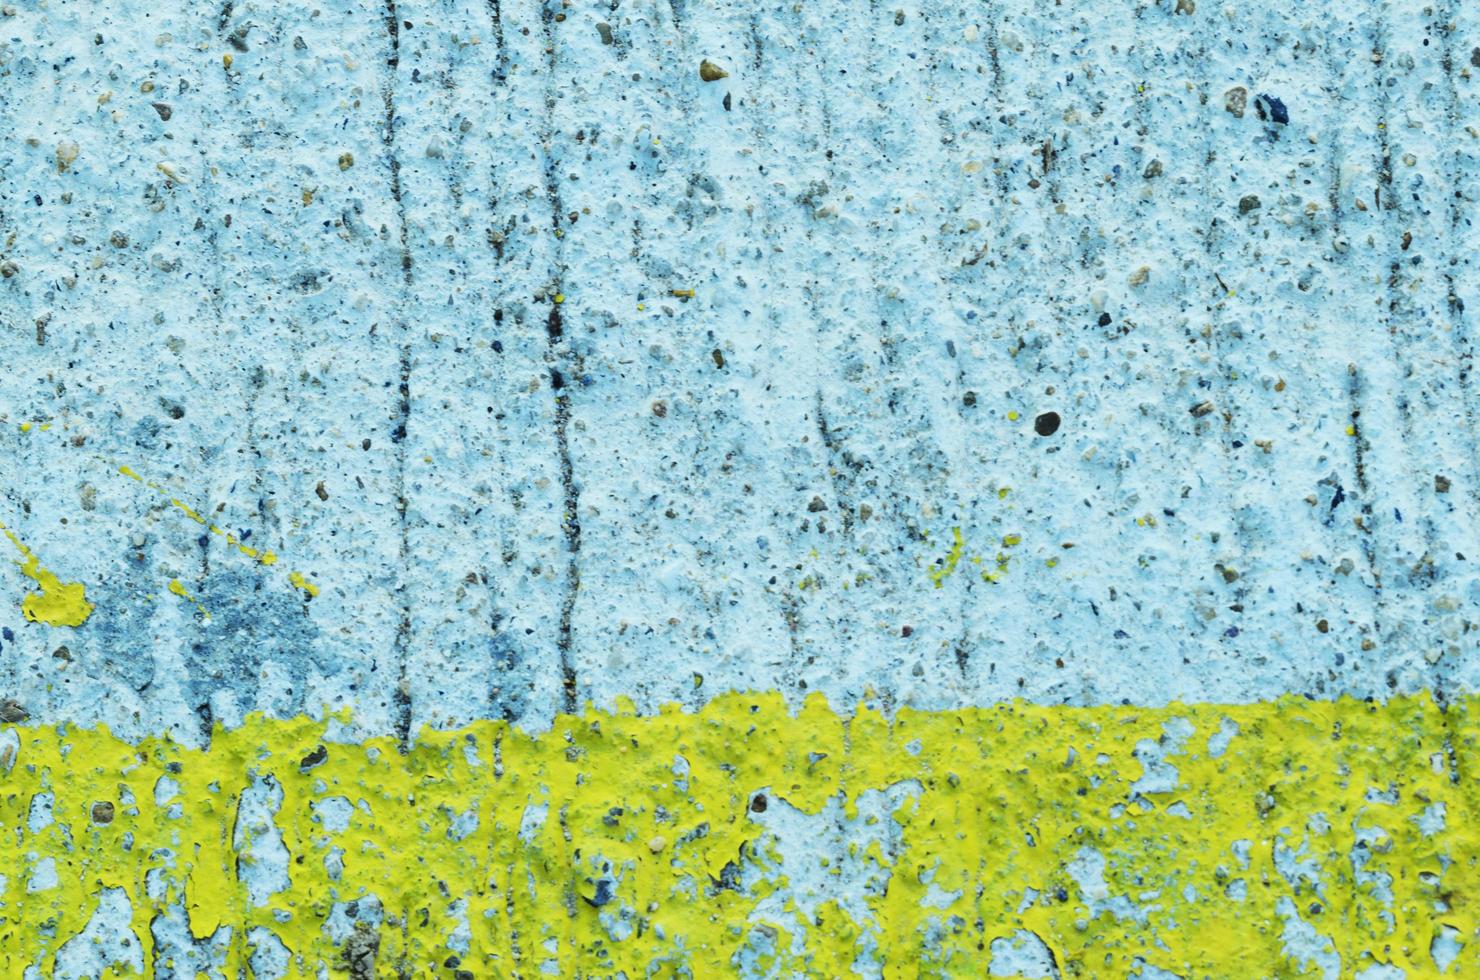 fundos abstratos do grunge com cor amarela descascada na textura da parede foto